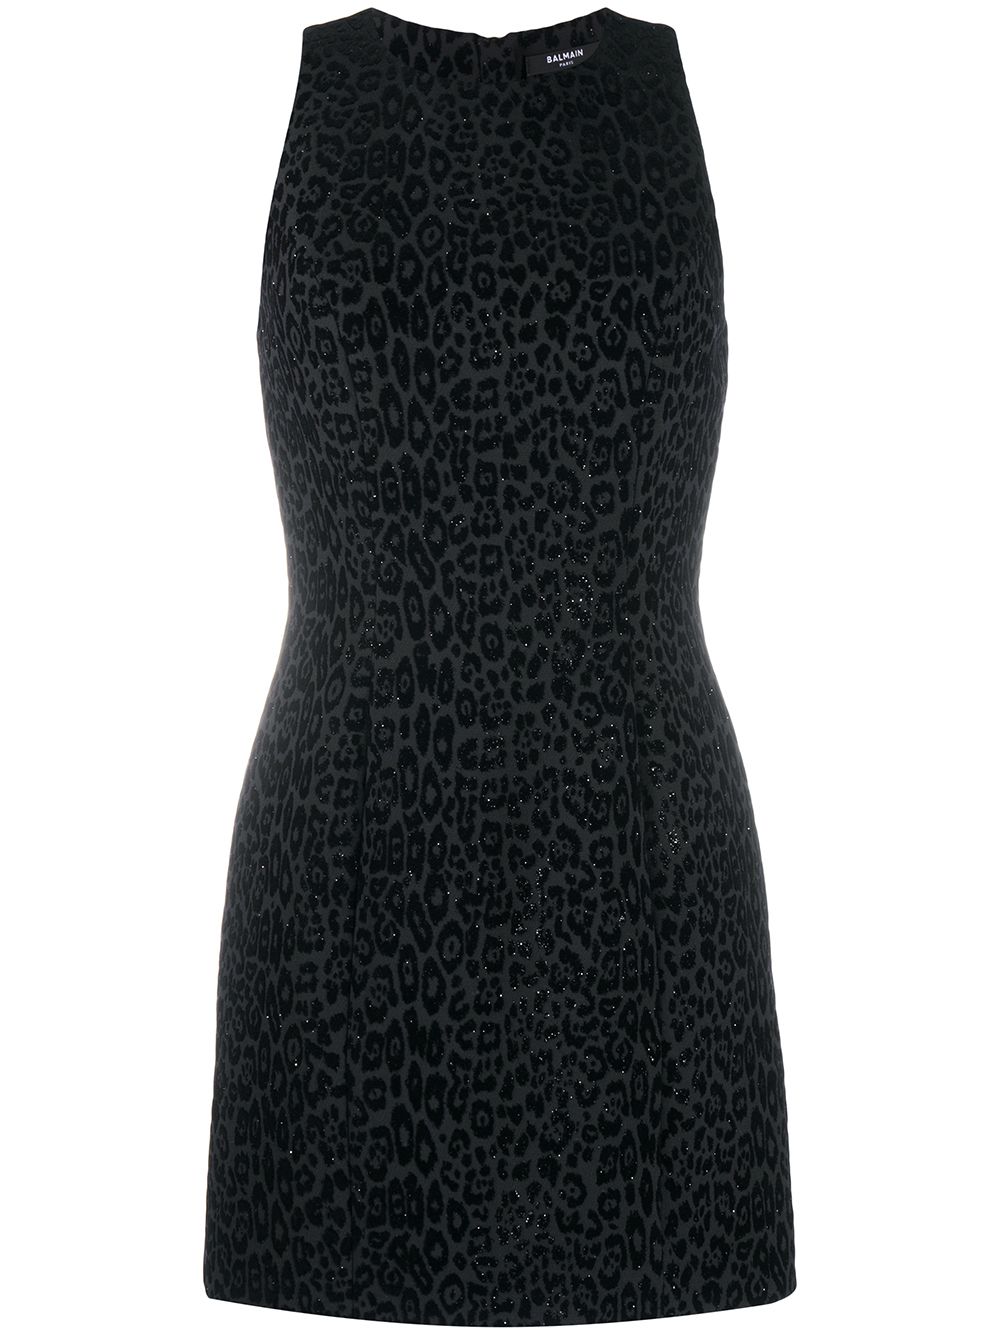 black and leopard print dress